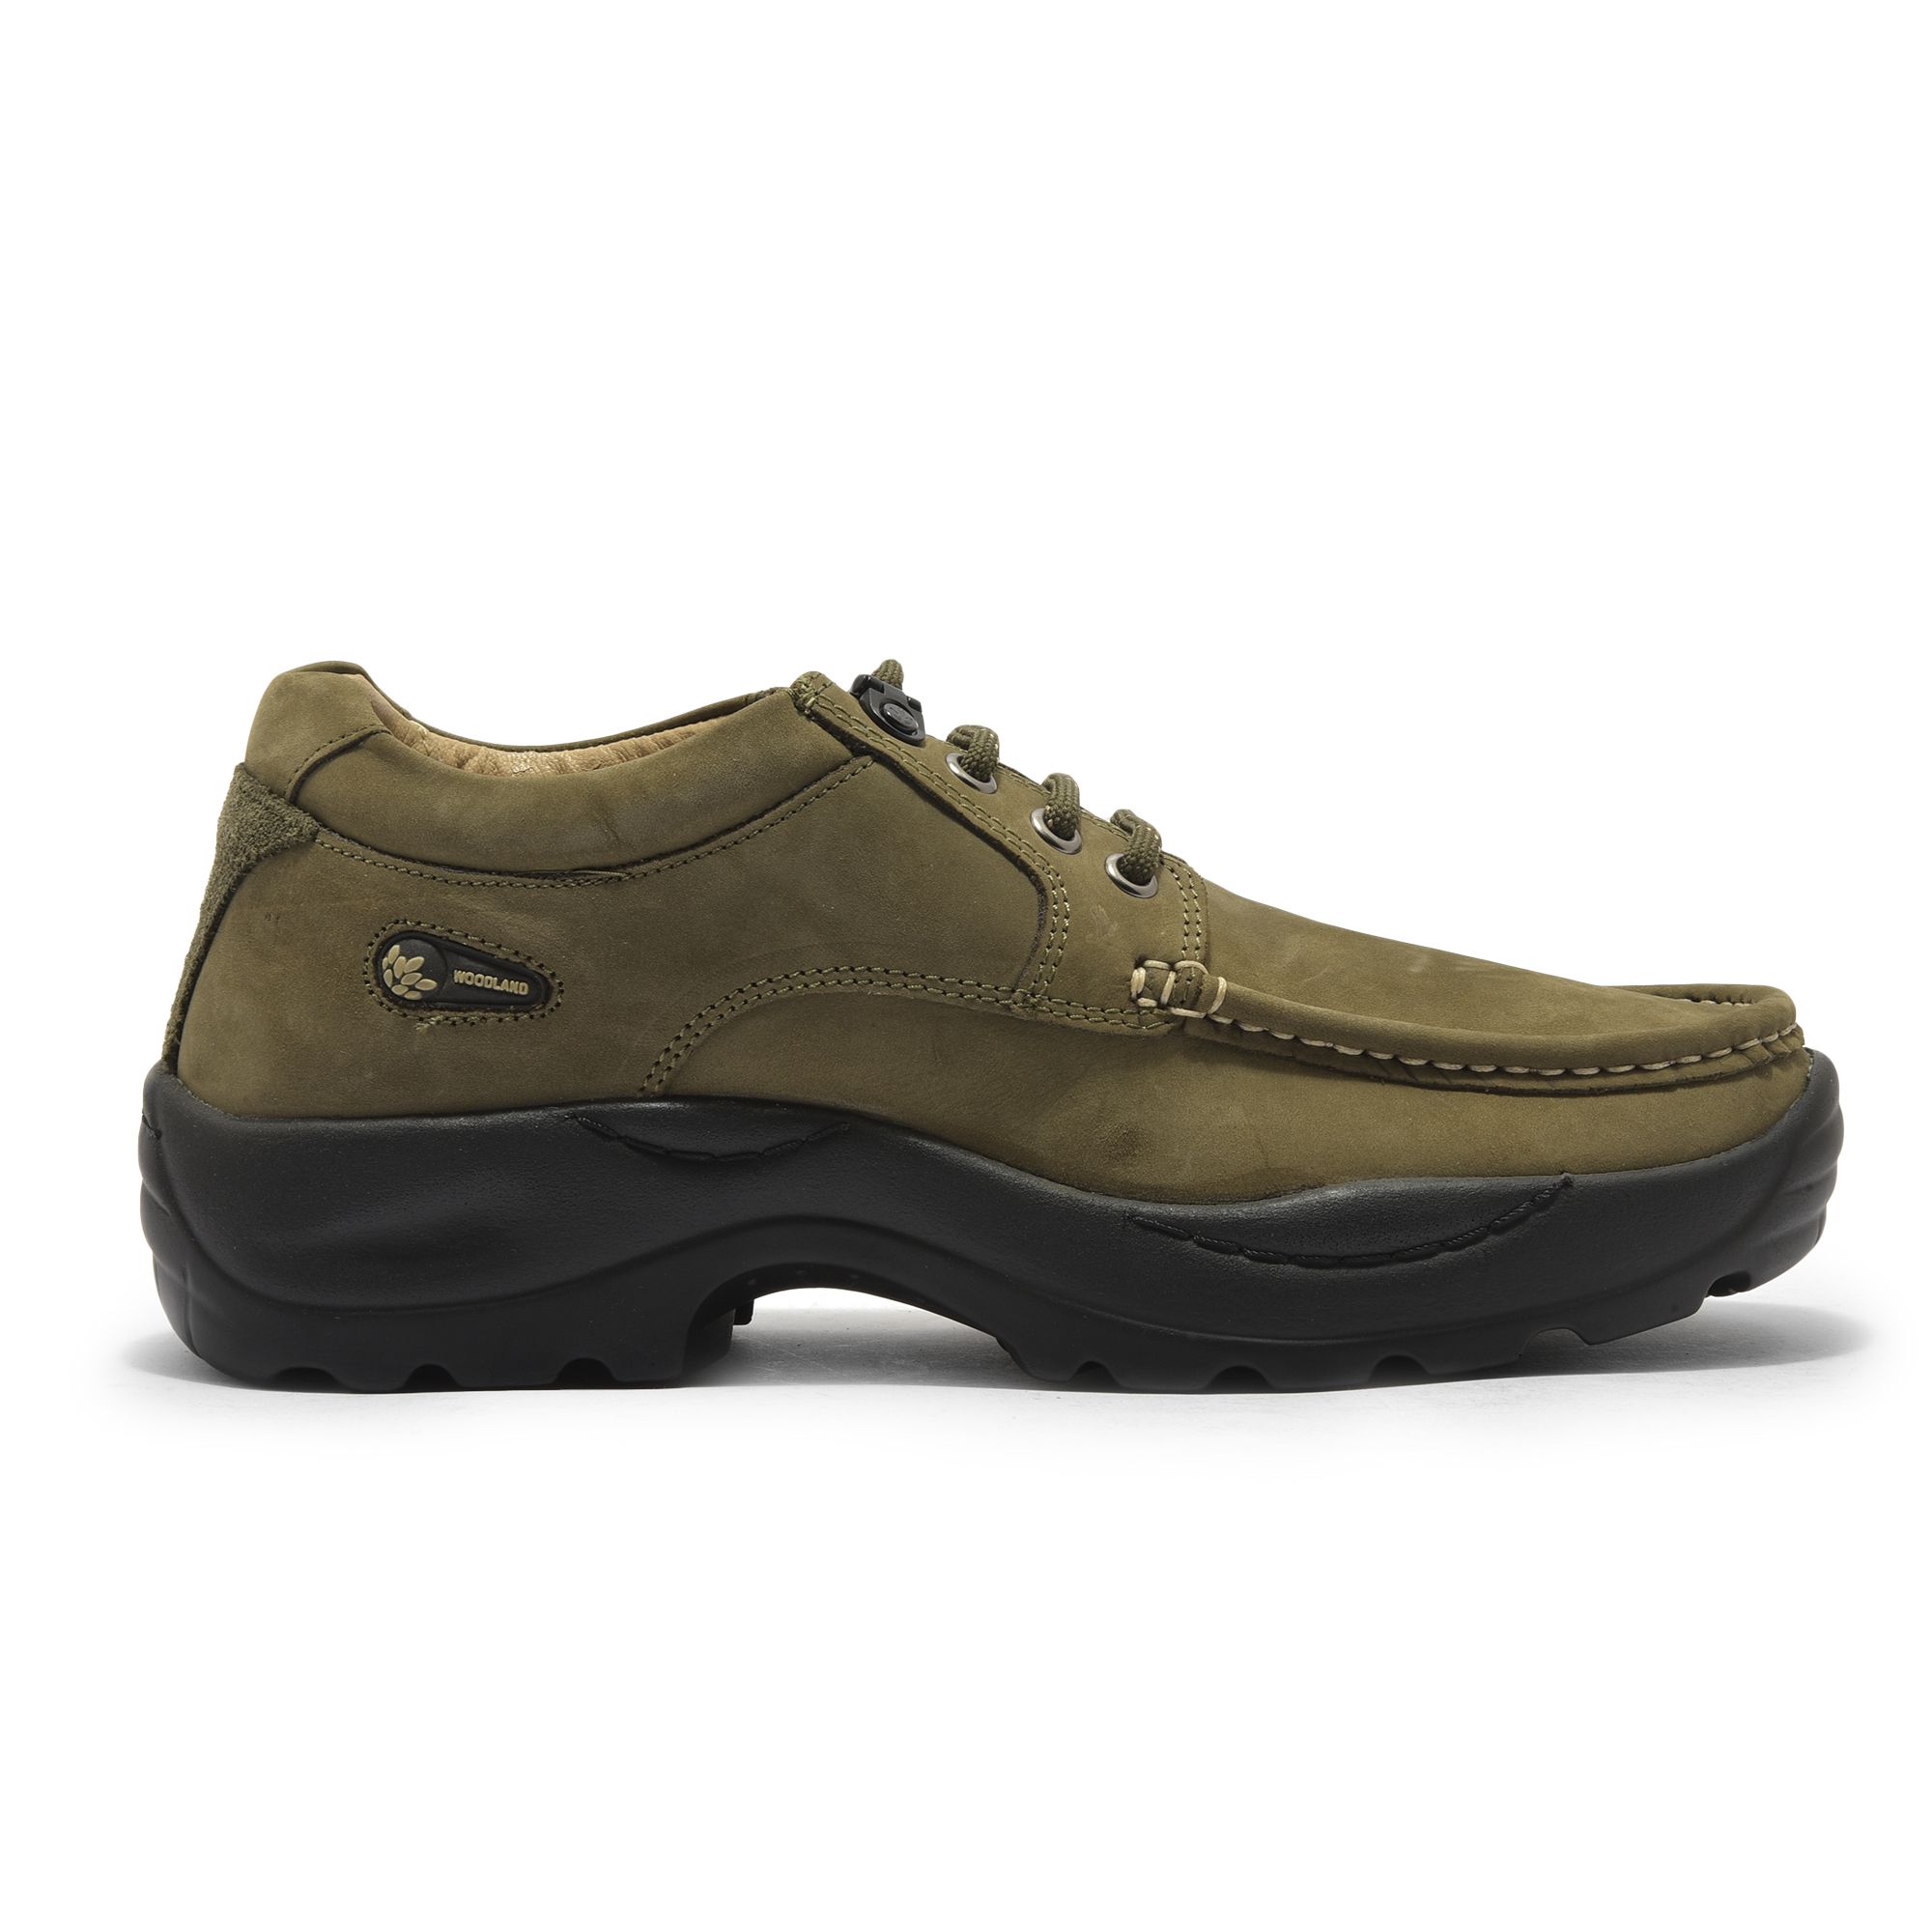 Buy Woodland Men's Olive Green Leather Casual Shoe-5 UK (39 EU) (OGCC  3464119) at Amazon.in